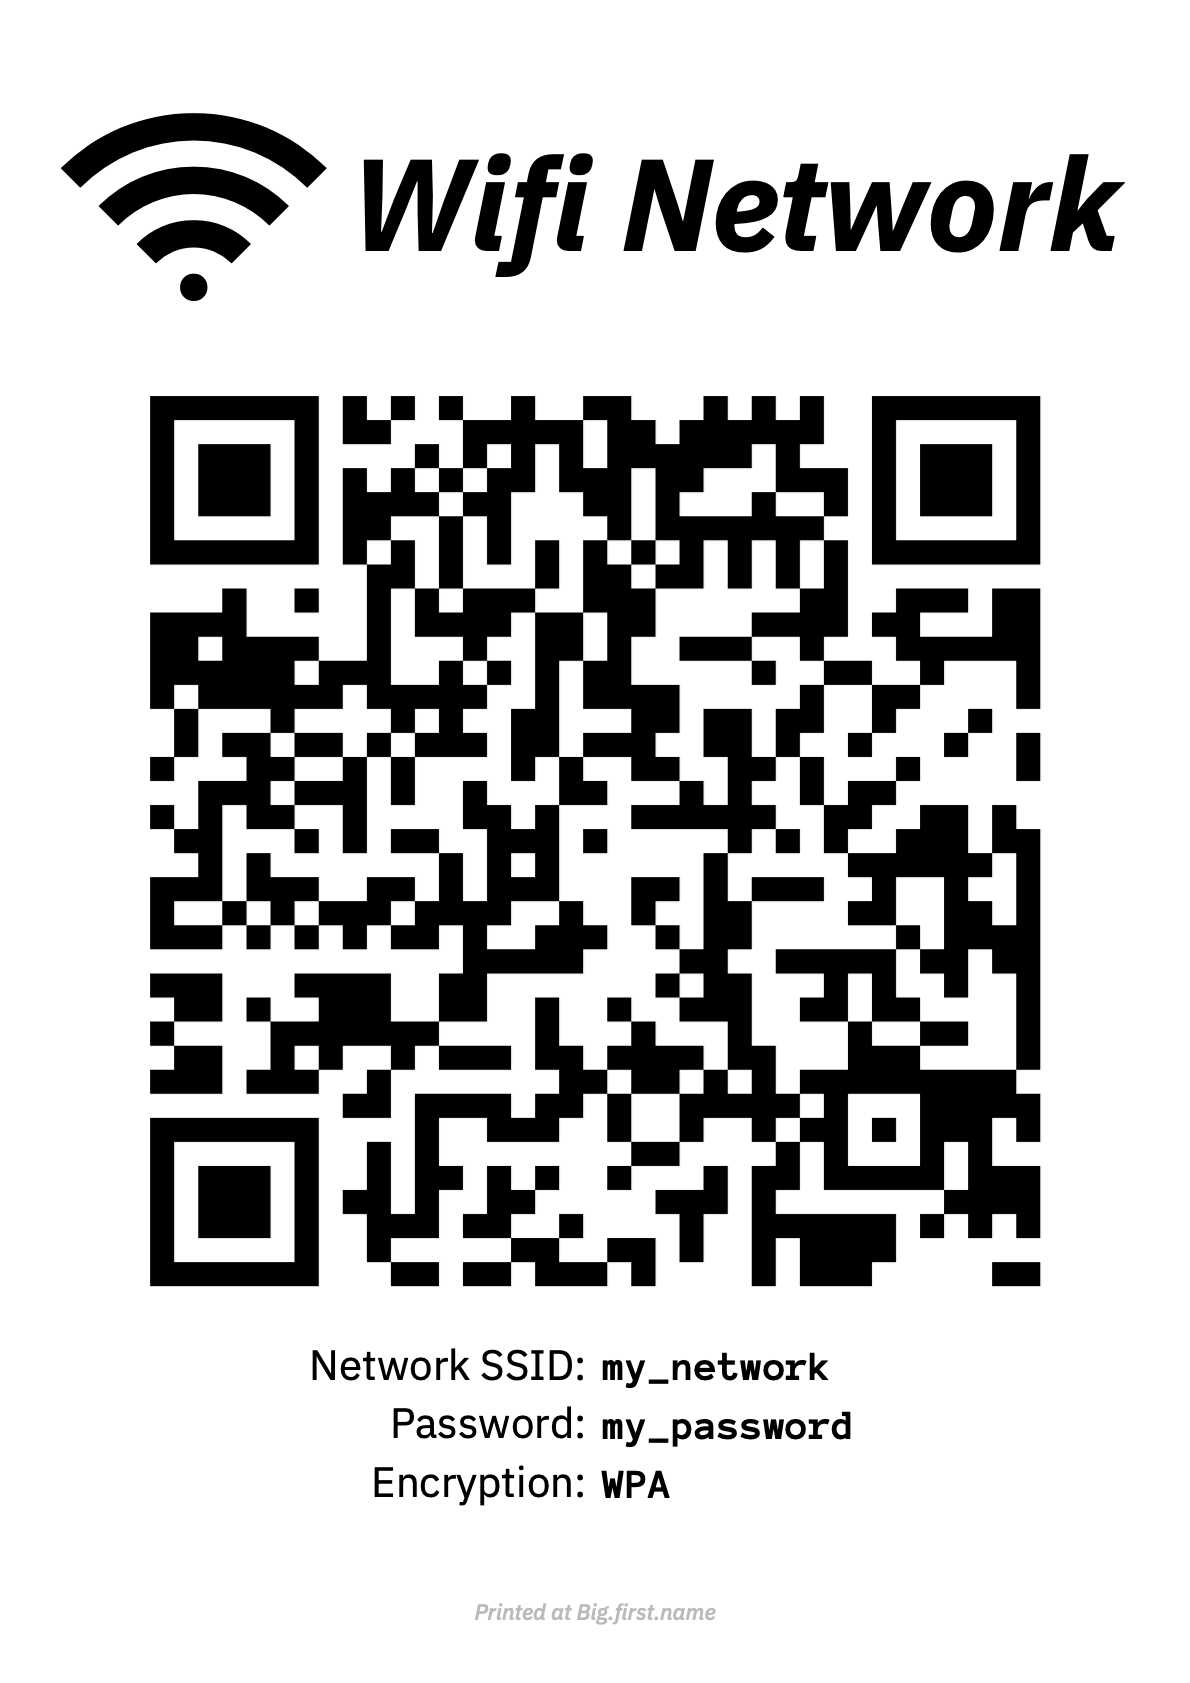 Saga eksplicit Ordsprog Free Wifi Network Password QR Code Poster Maker | Big.first.name